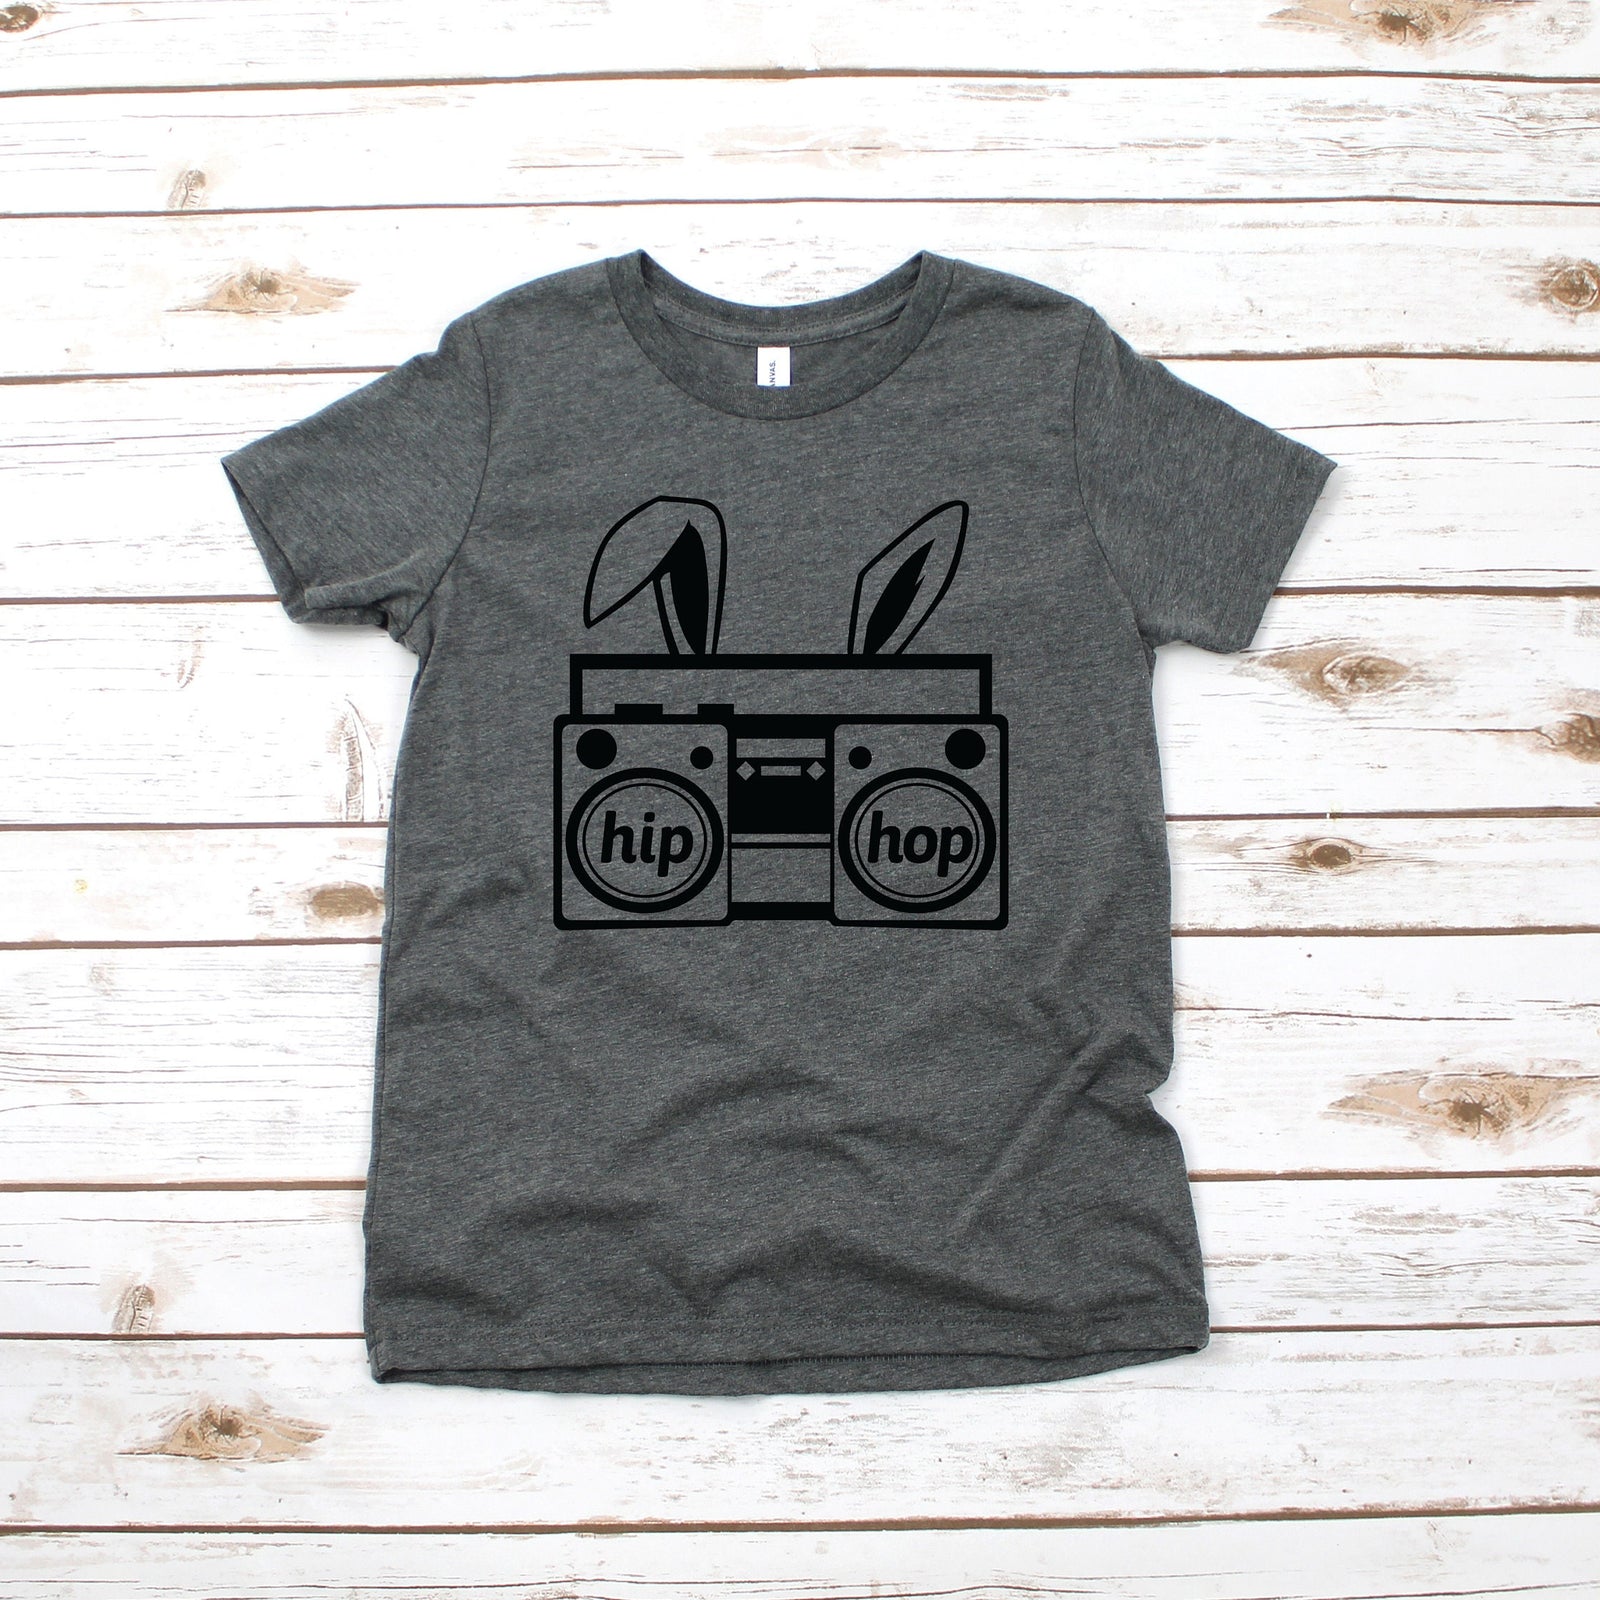 Hip Hop Bunny - Cute Bunny Shirt - Kids Easter Shirt - Cute Rabbit Shirt